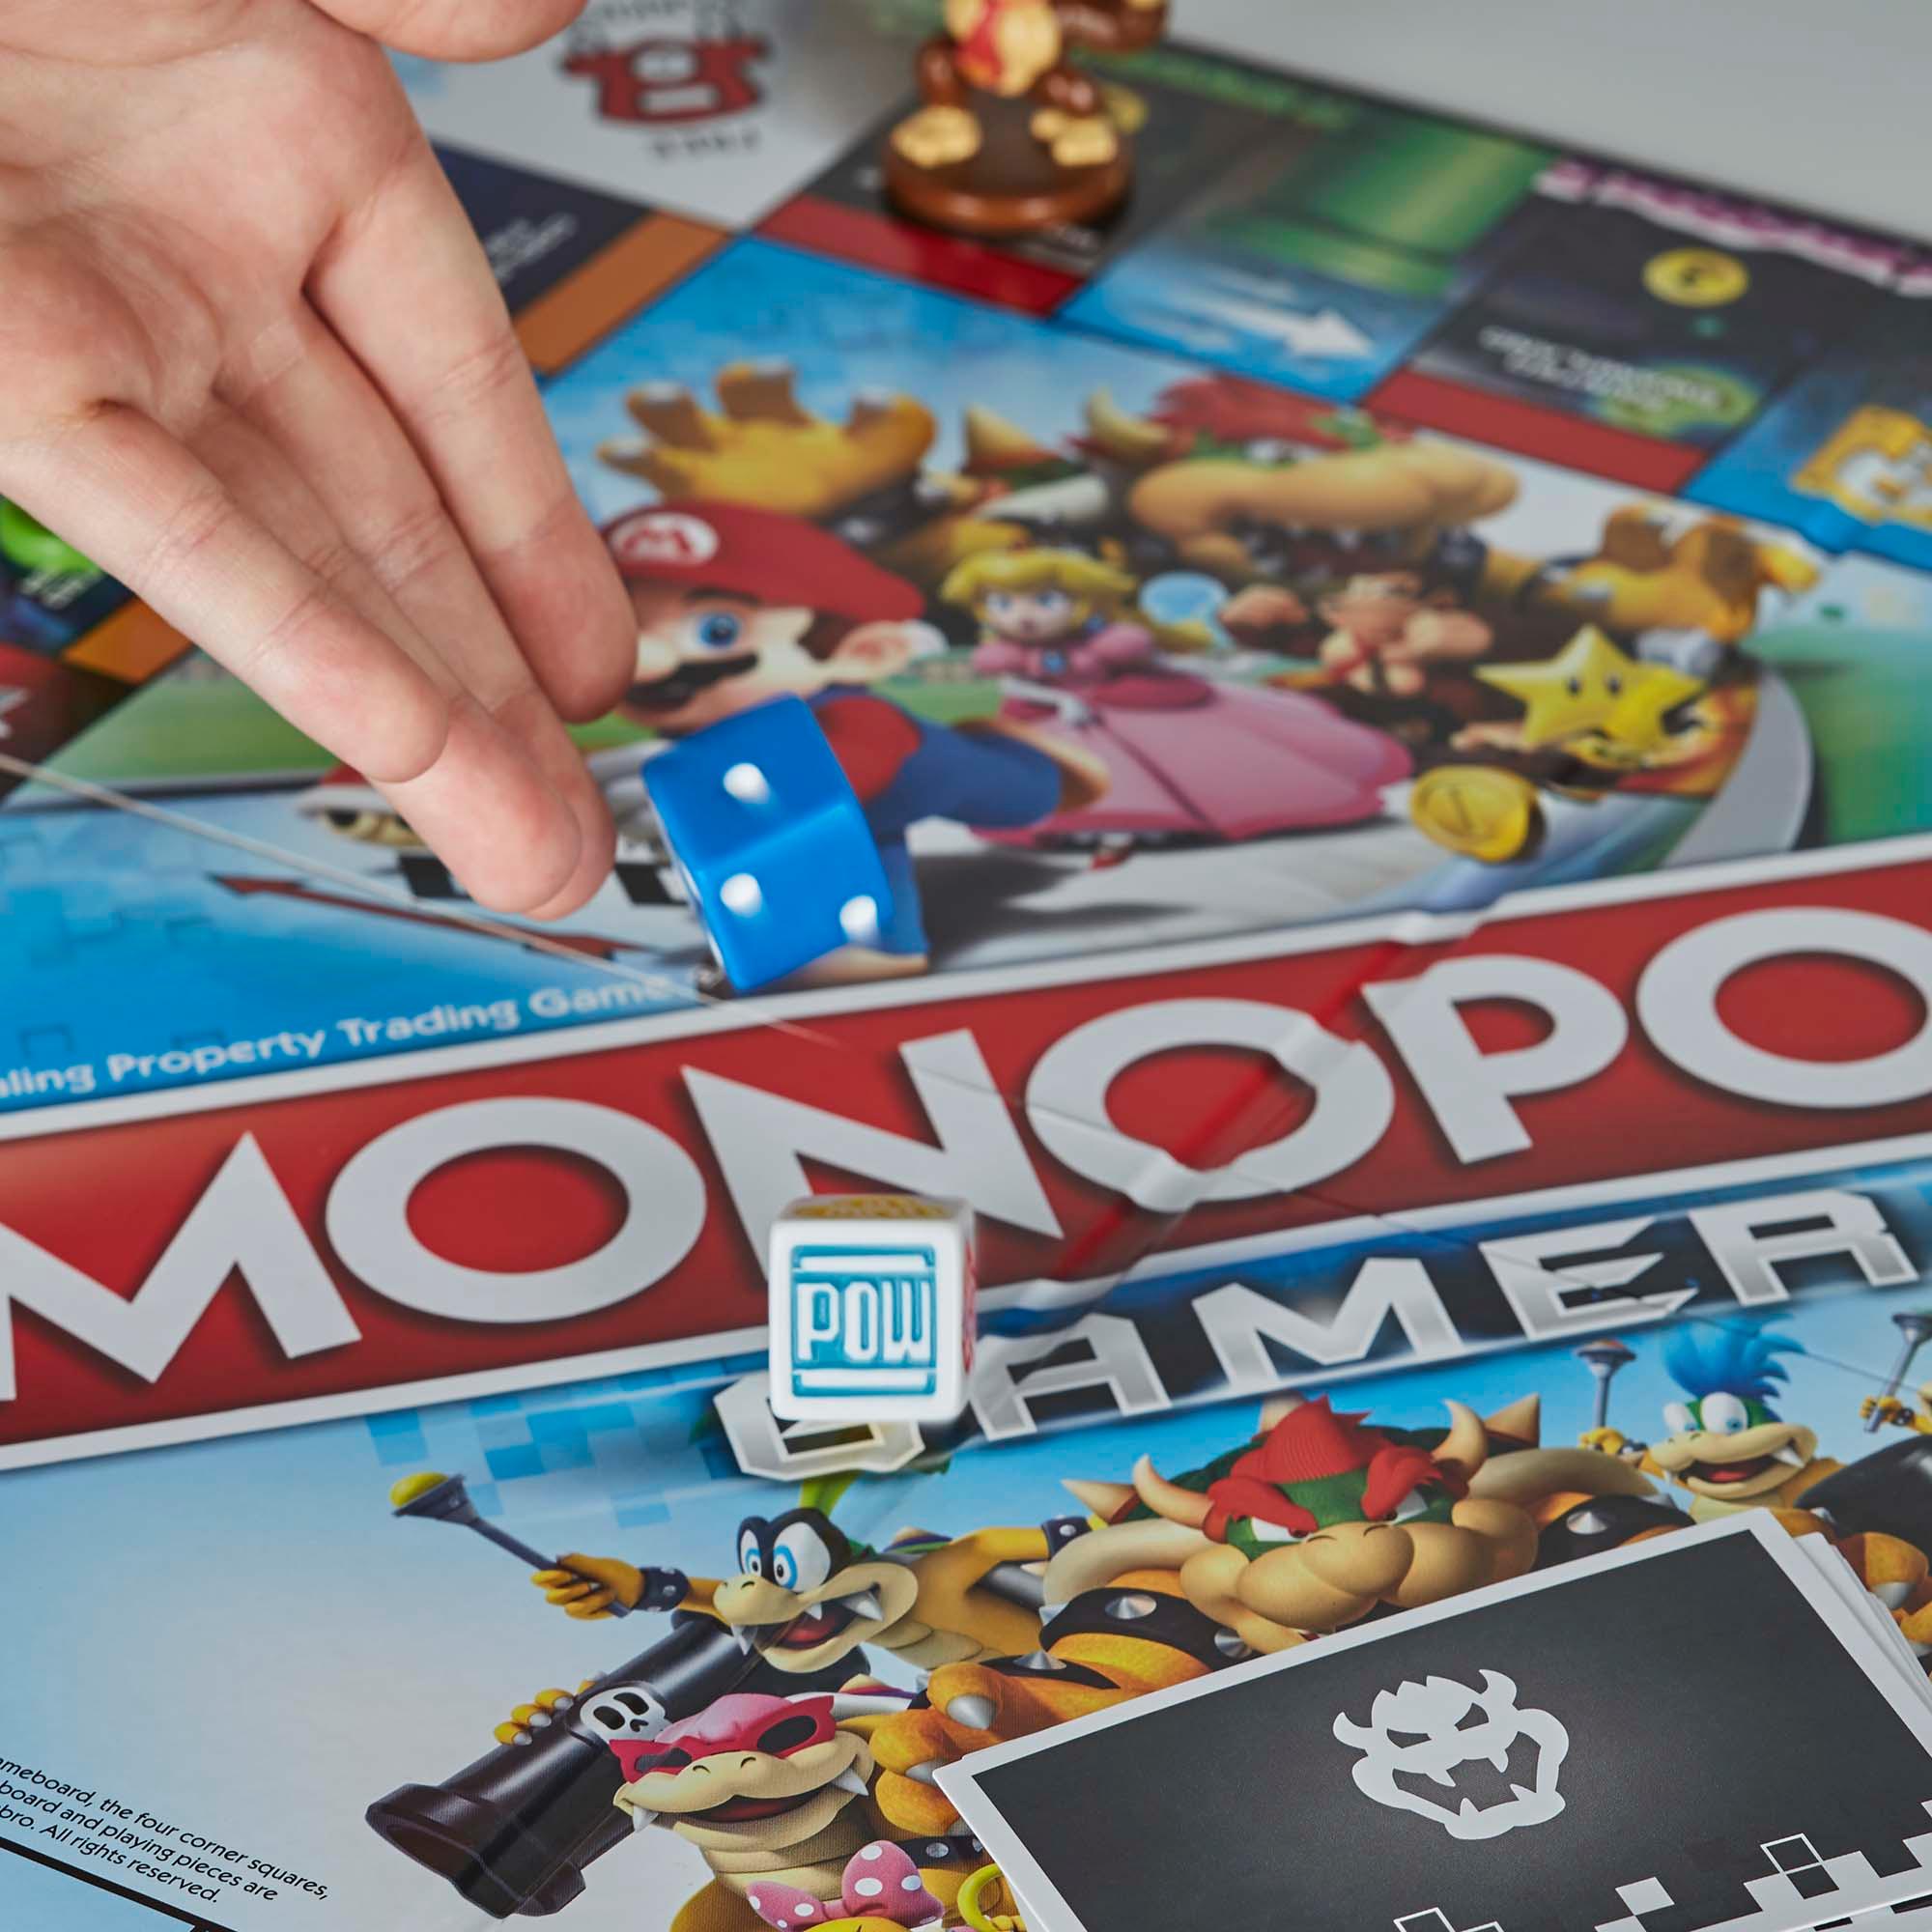 Monopoly Gamer Exclusivo Hasbro Gaming Nintendo